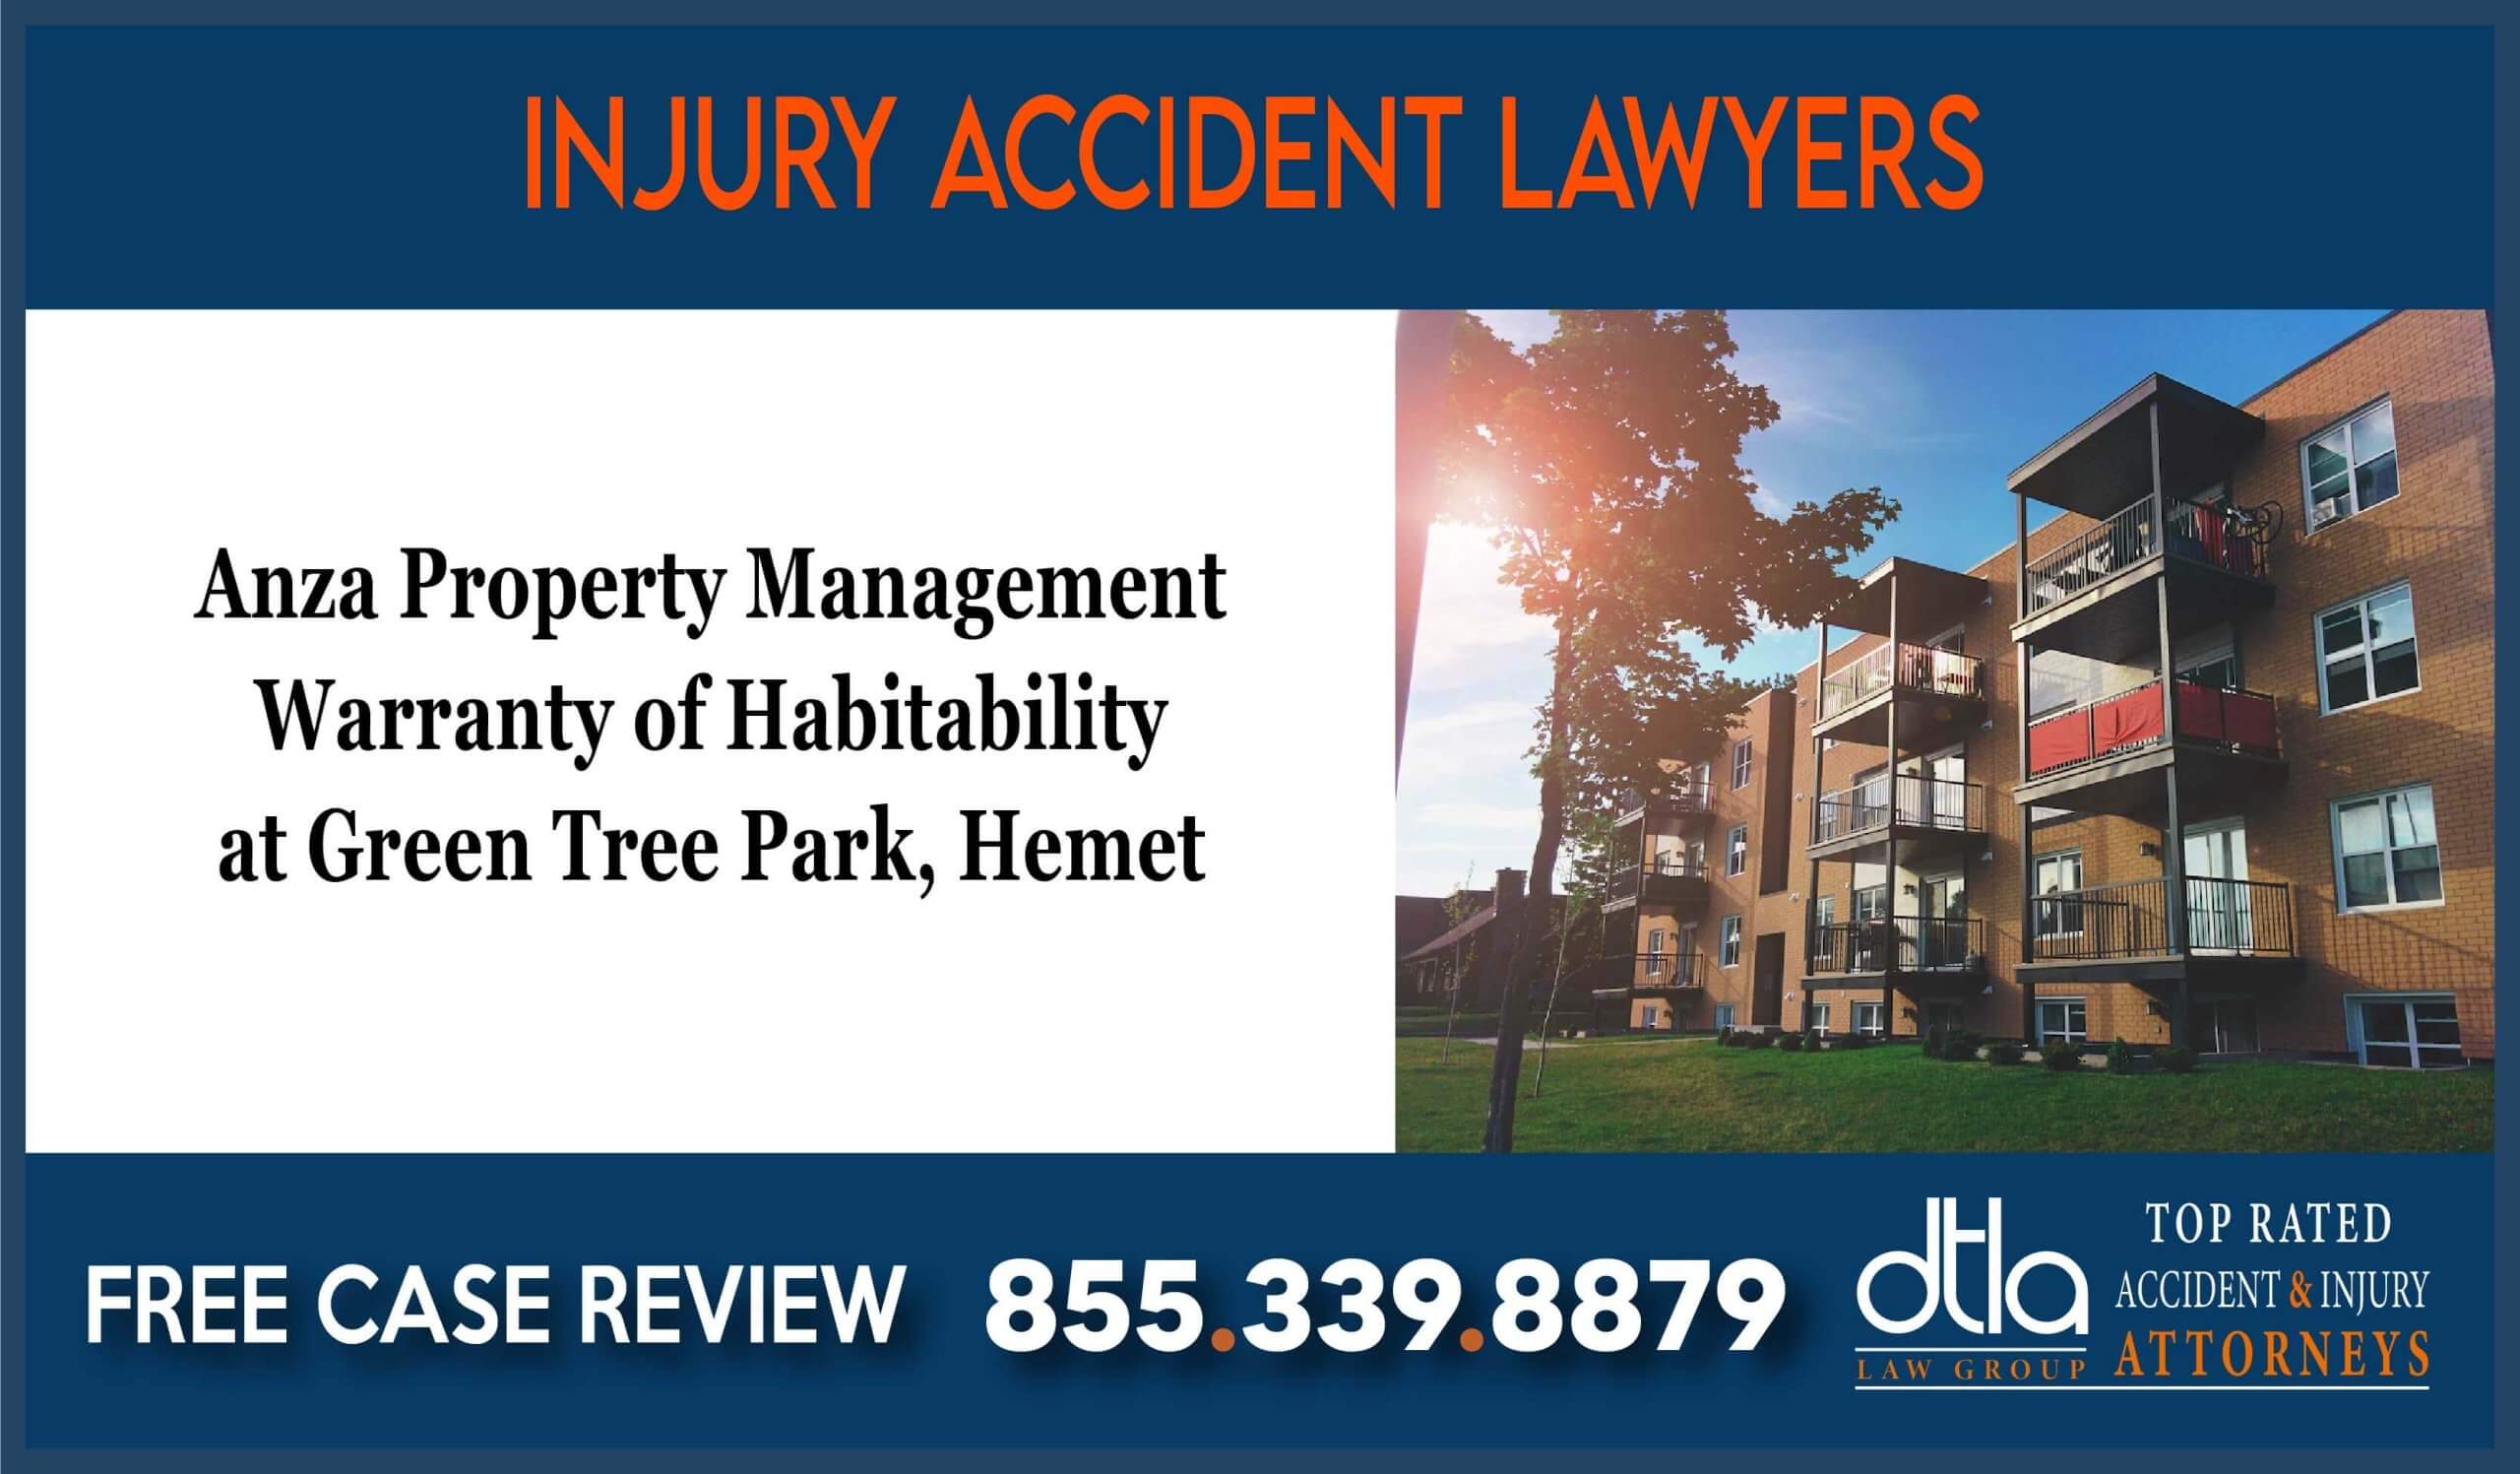 Anza Property Management Warranty of Habitability at Green Tree Park Hemet lawyer attorney sue lawsuit